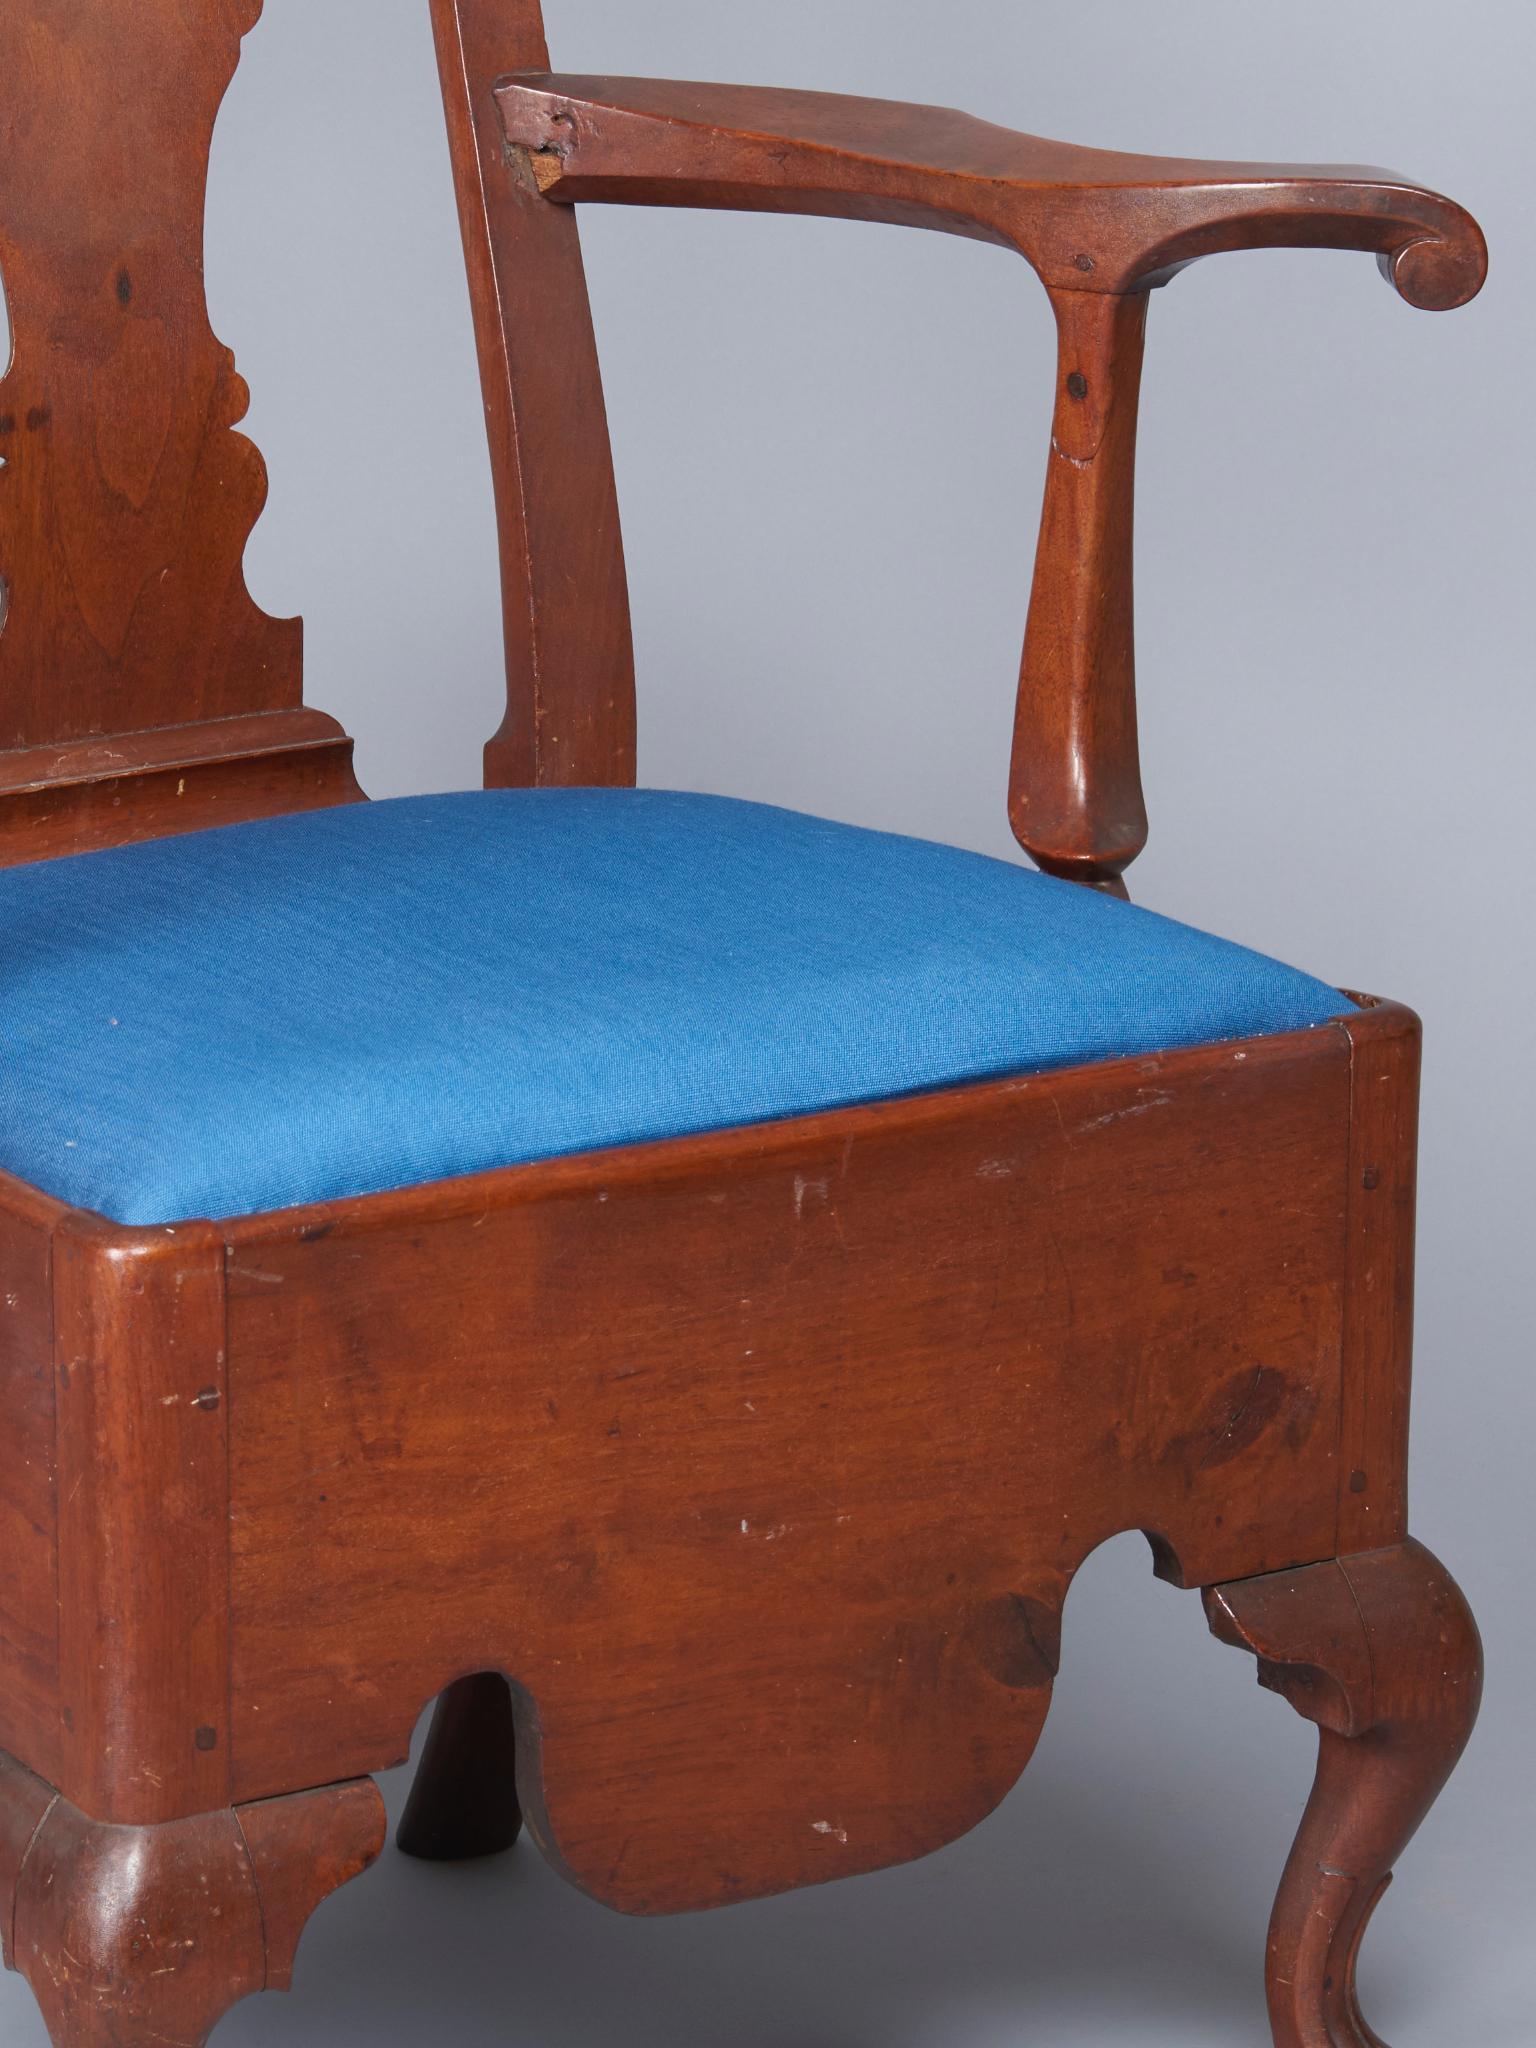 antique wooden potty chair value